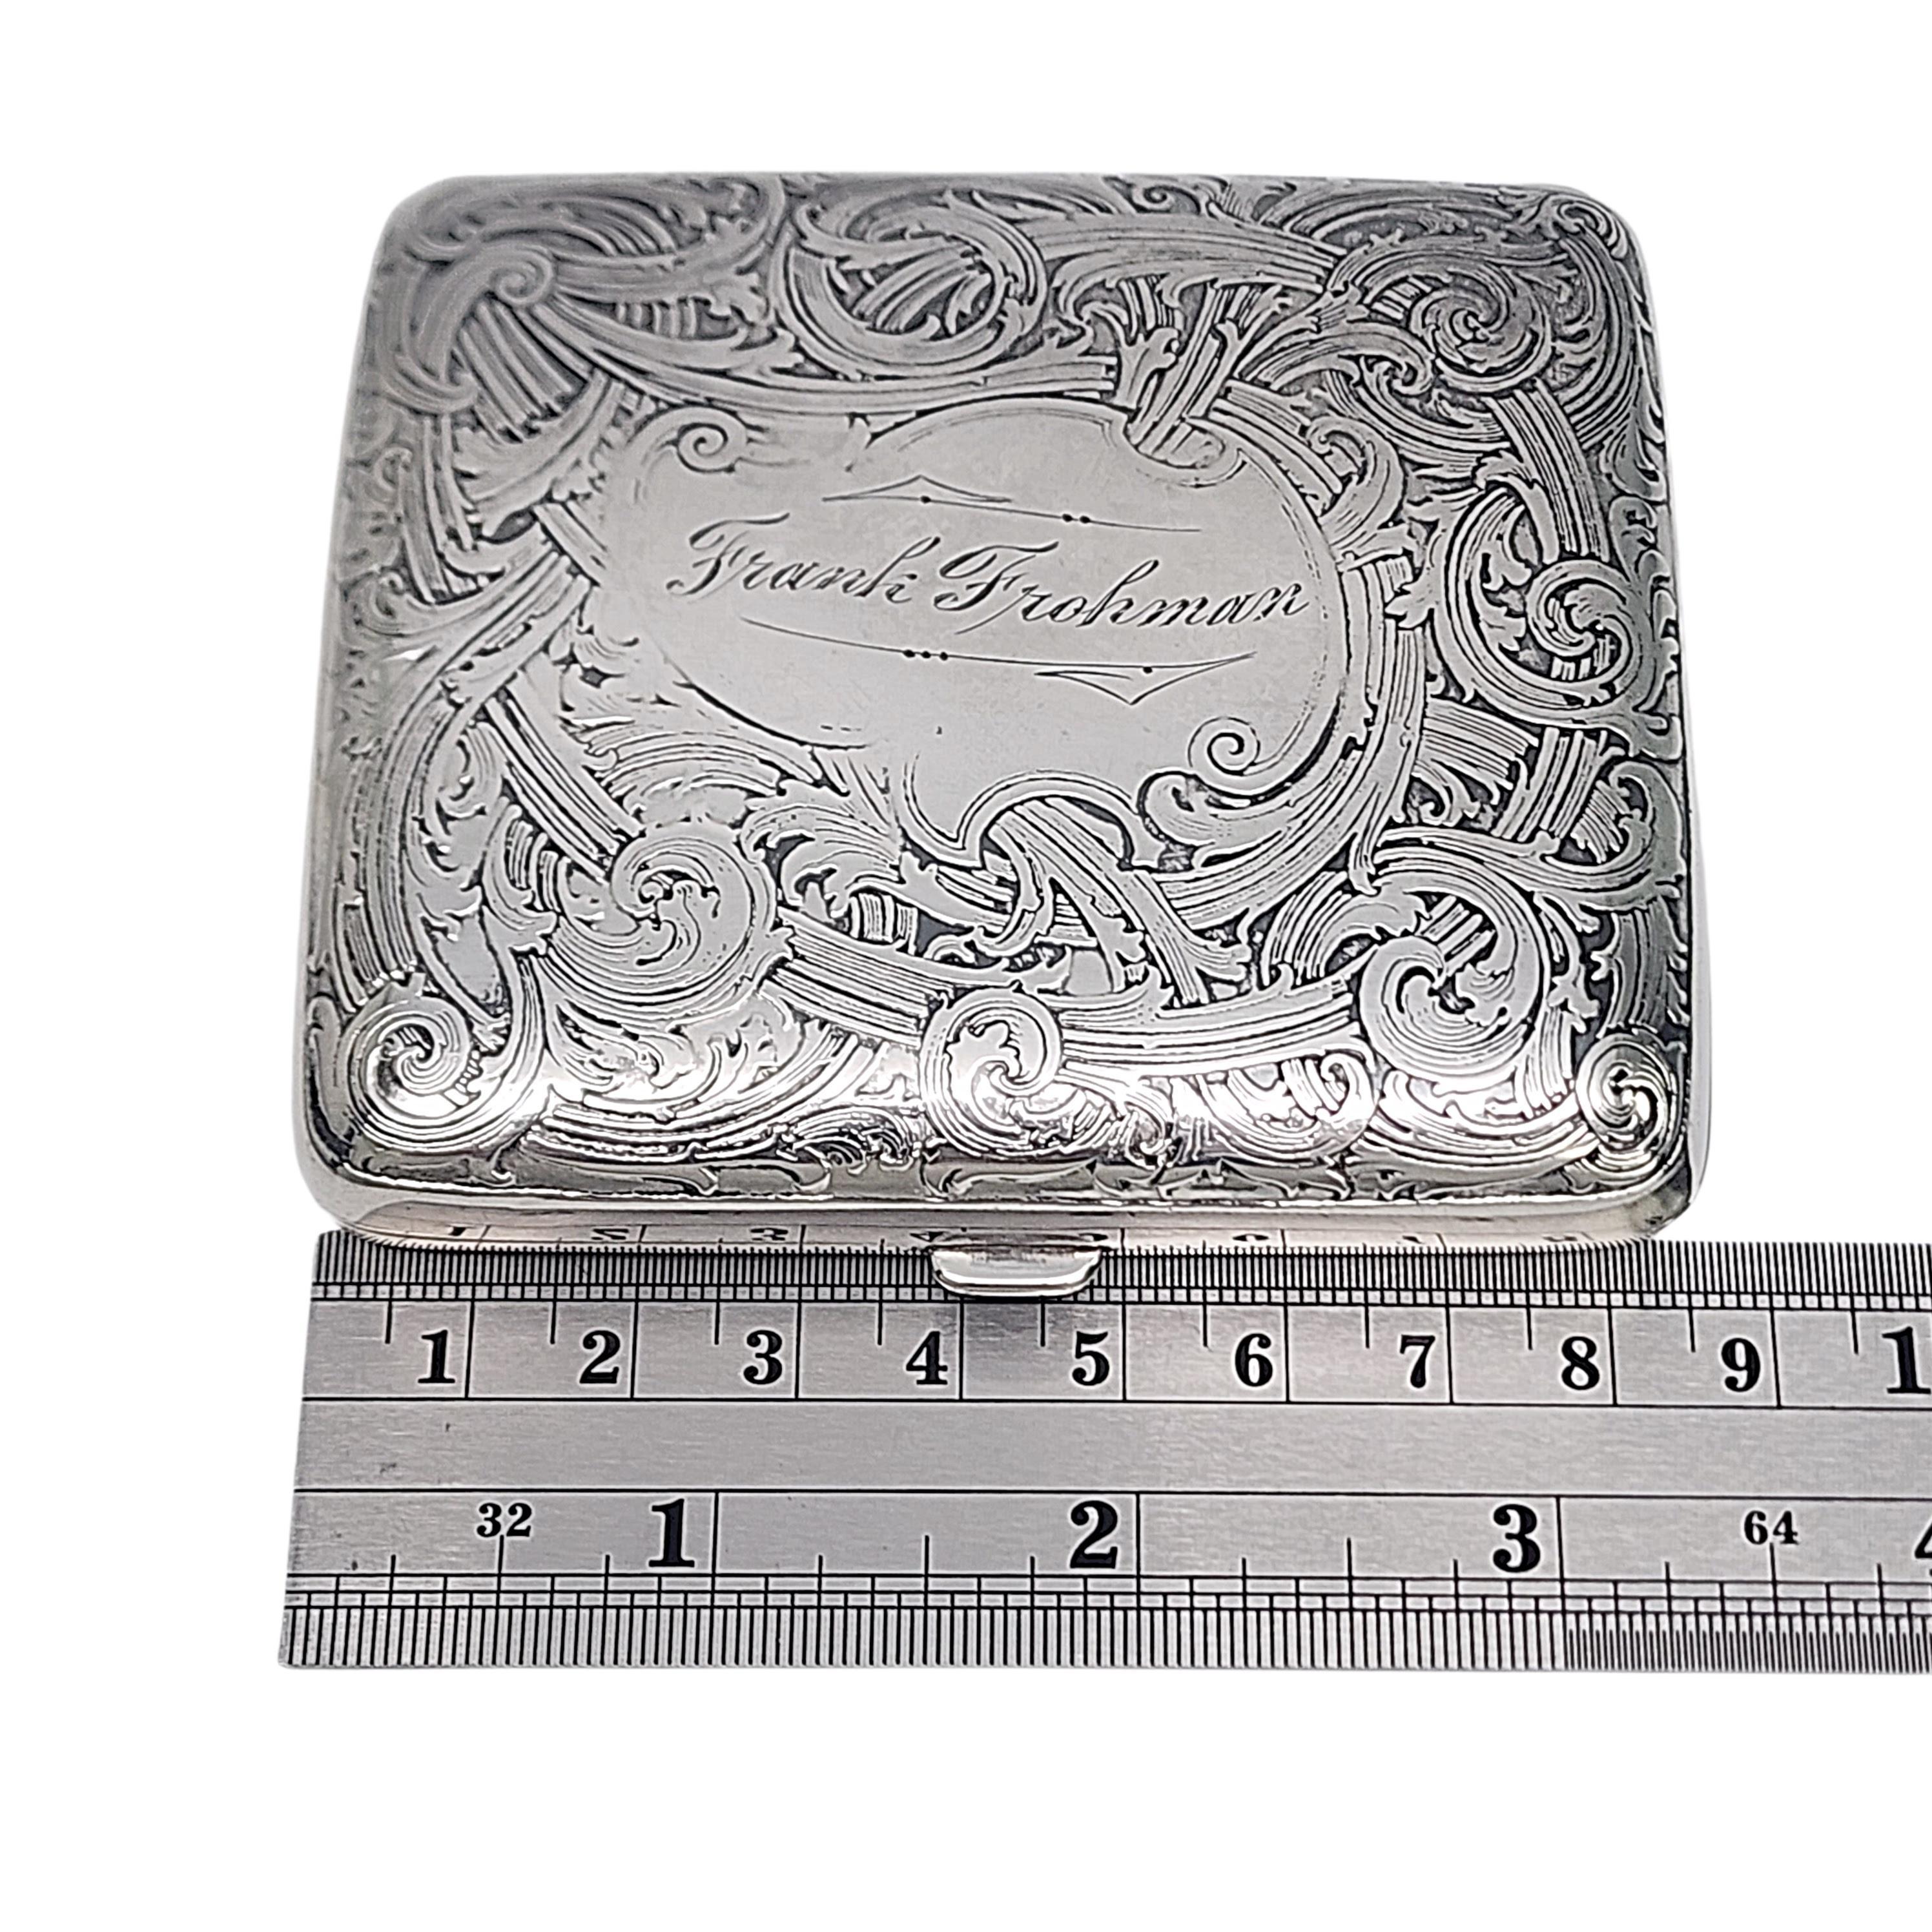 Antique William B Kerr Sterling Silver Cigarette Case w/Engraving #16526 For Sale 4